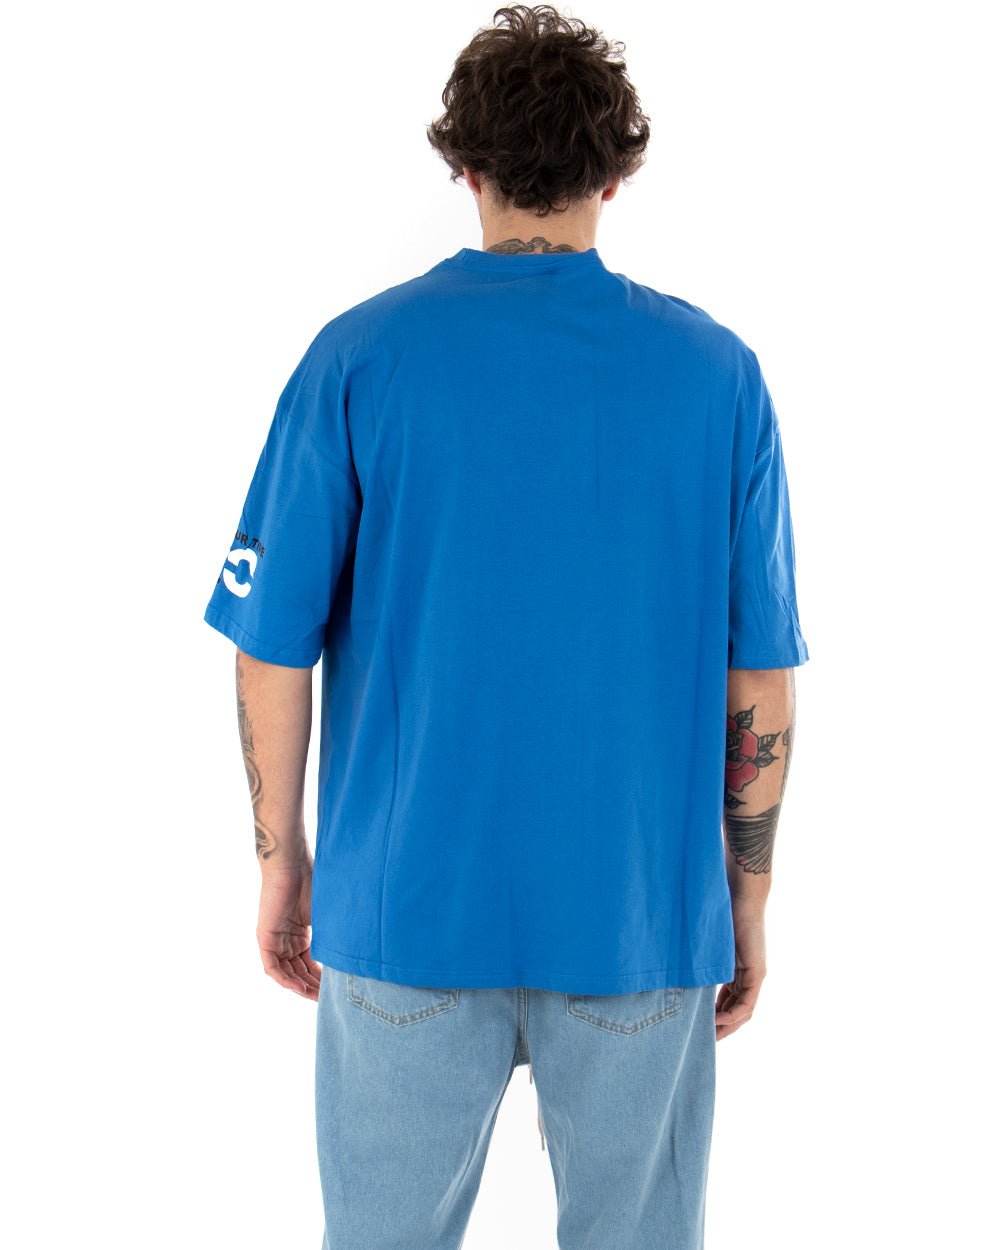 T-shirt Uomo Stampa Blu Royal Girocollo Oversize Maniche Corte Casual GIOSAL